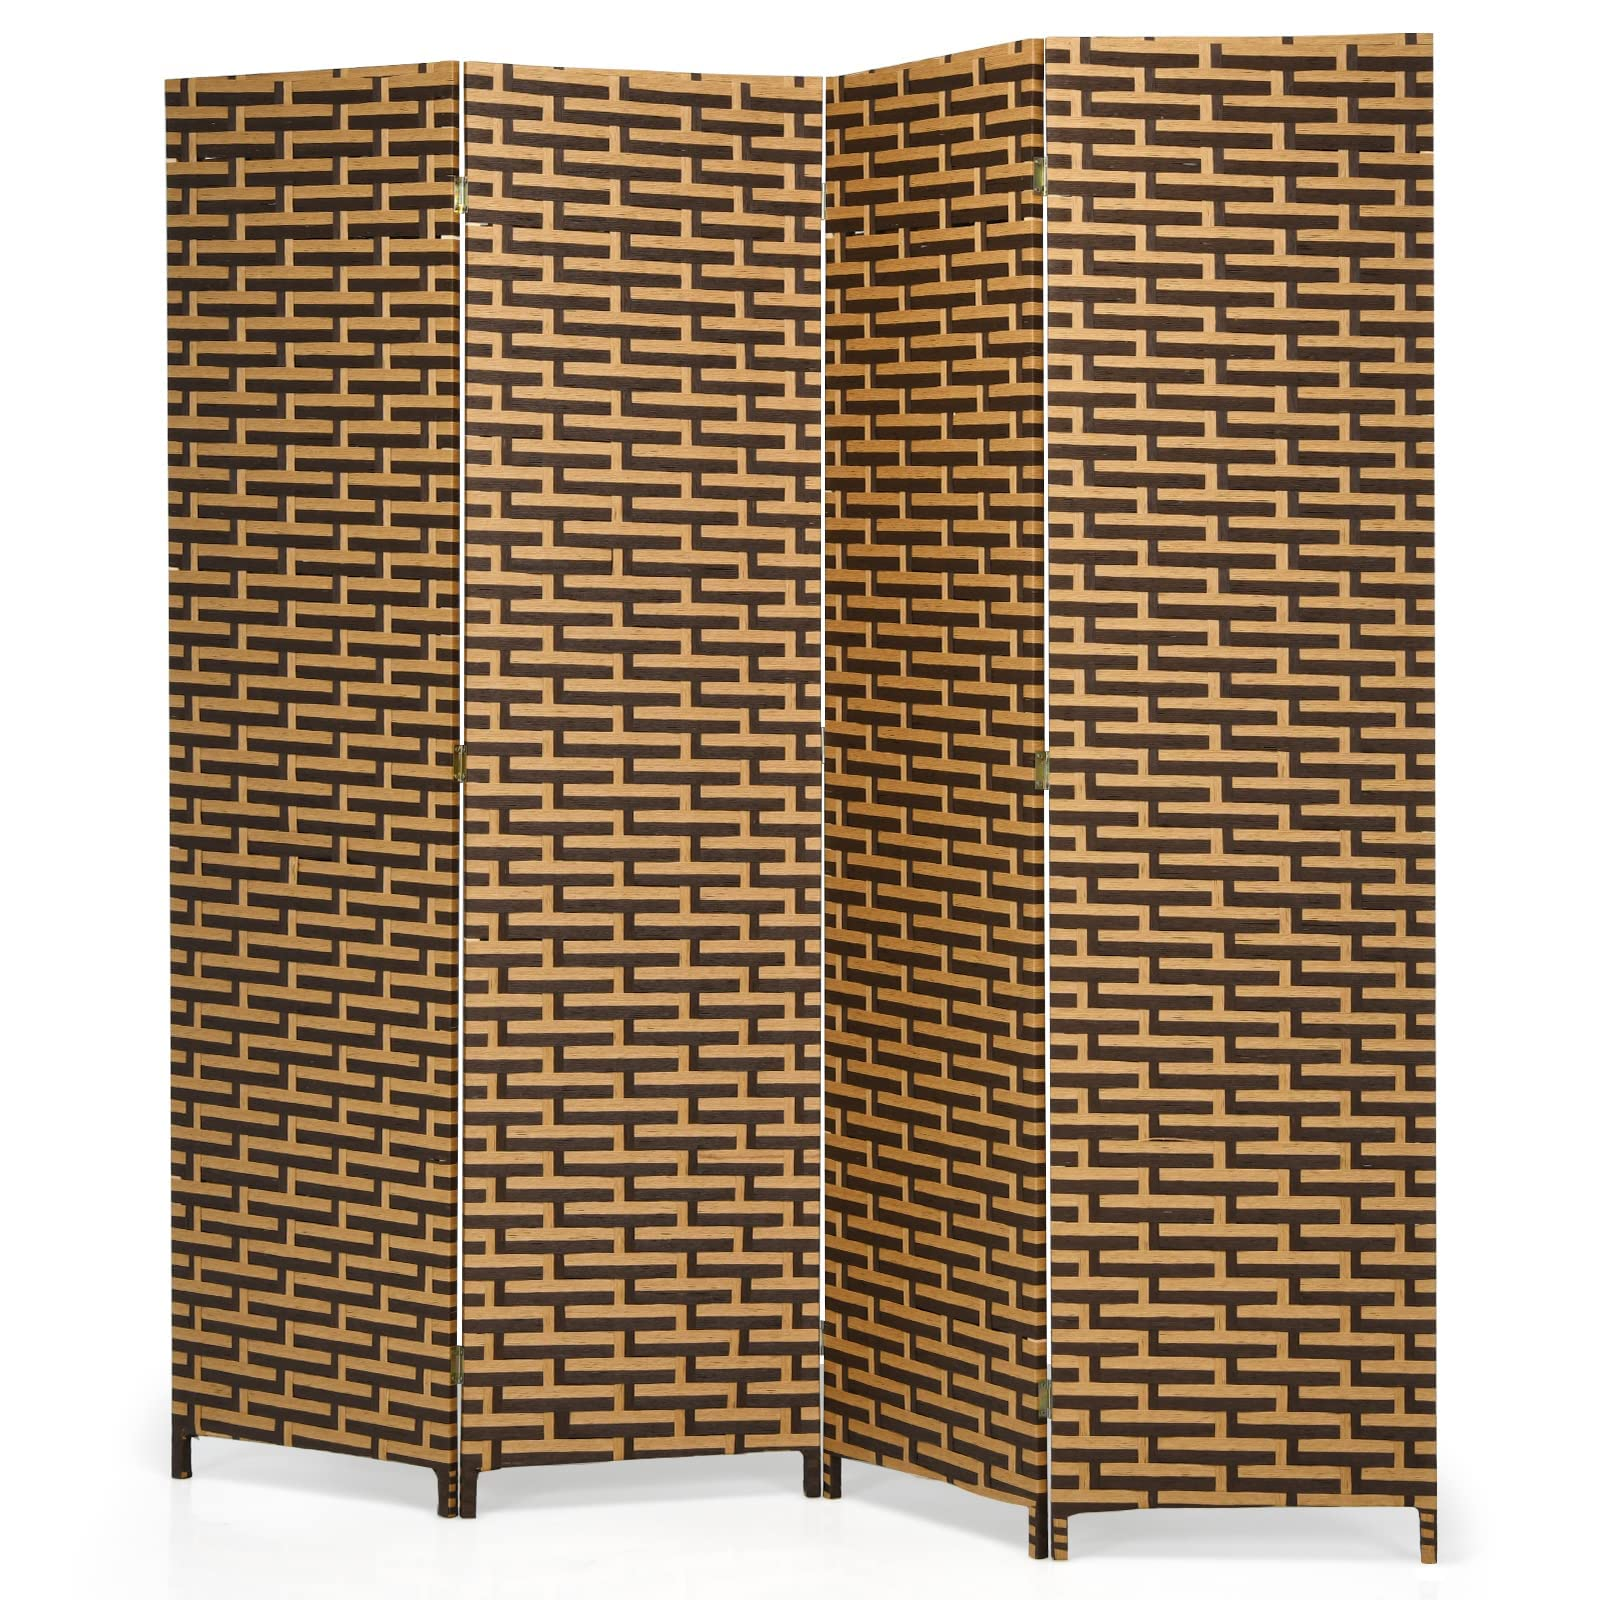 Giantex Room Divider, 6 Ft 4 Panel Handmade Rattan Room Divider